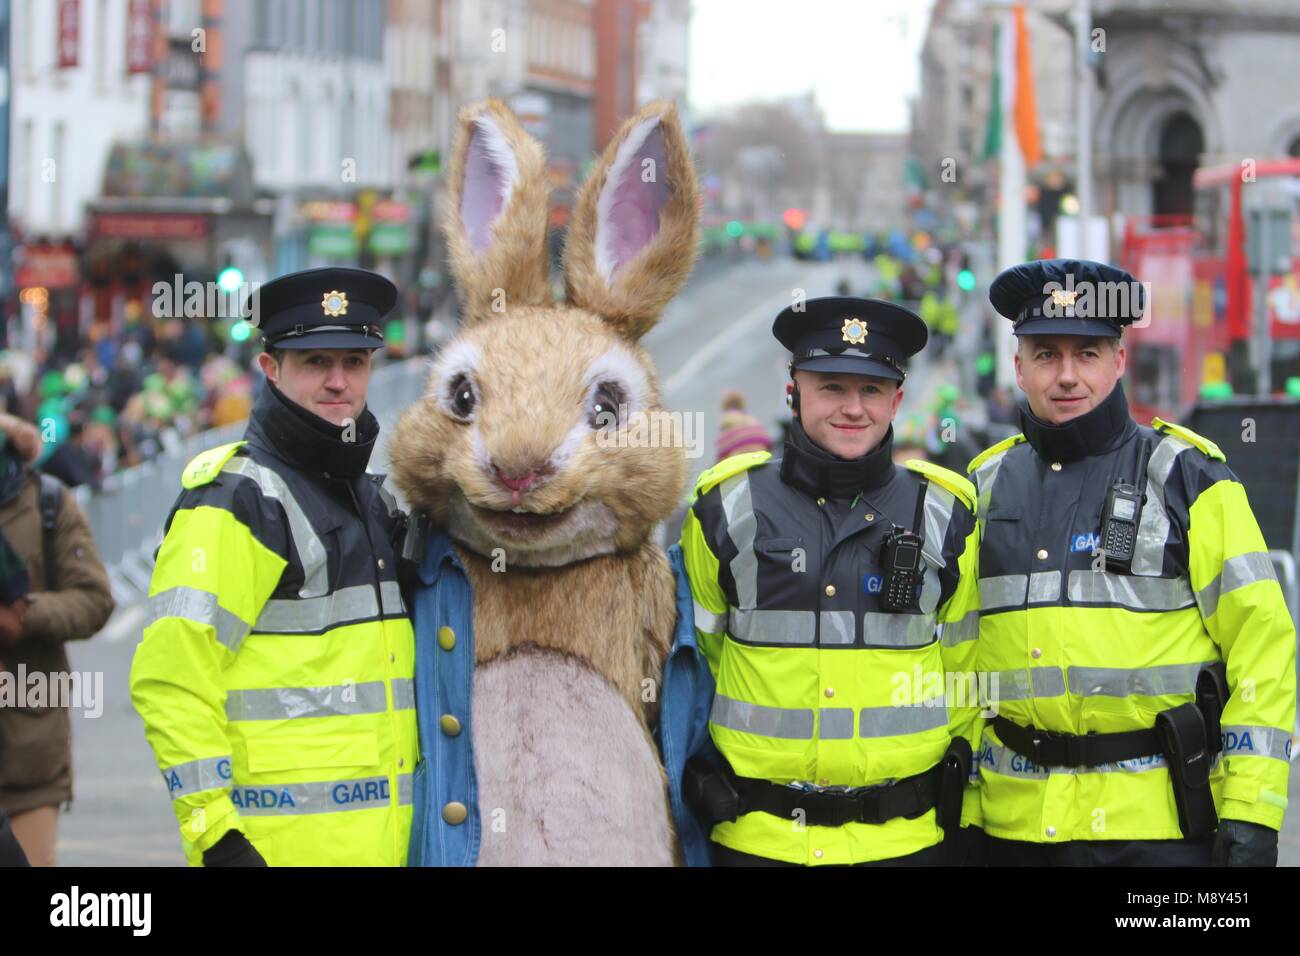 Peter Rabbit In St. Patrick's Day Parade Dublin 2018 Stock Photo